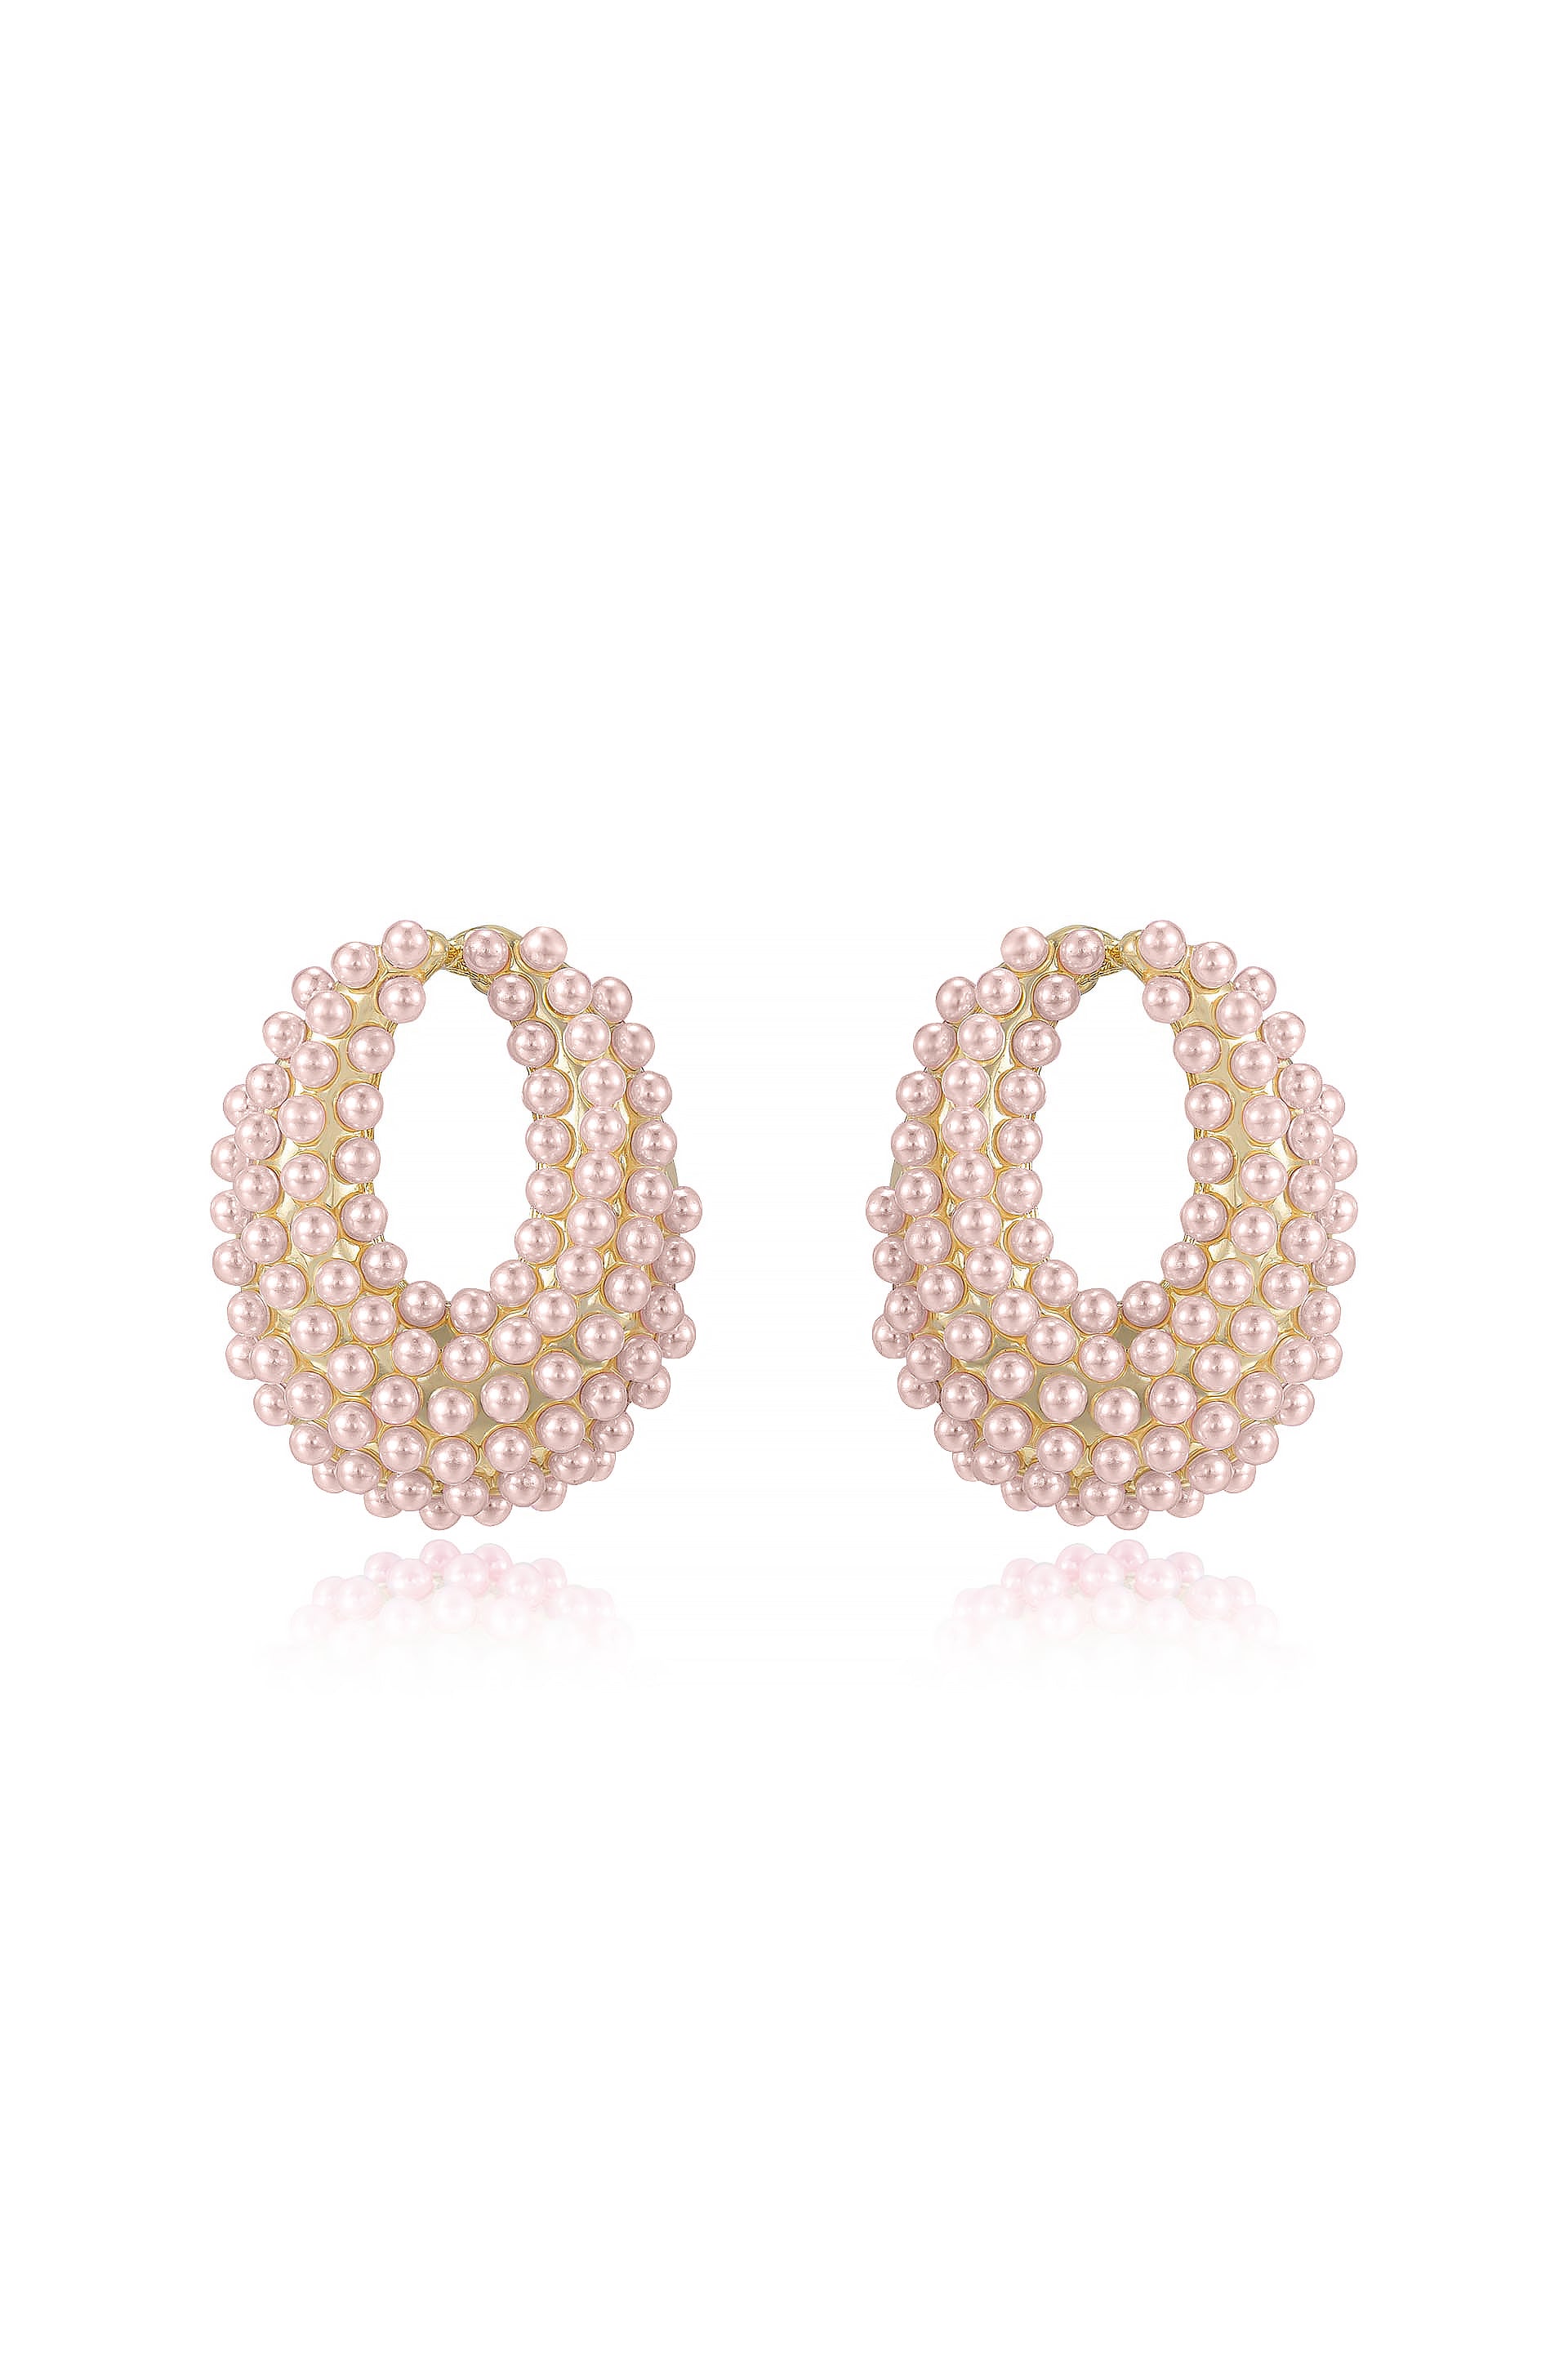 Classic Pearl Cluster Stud Earrings in pink